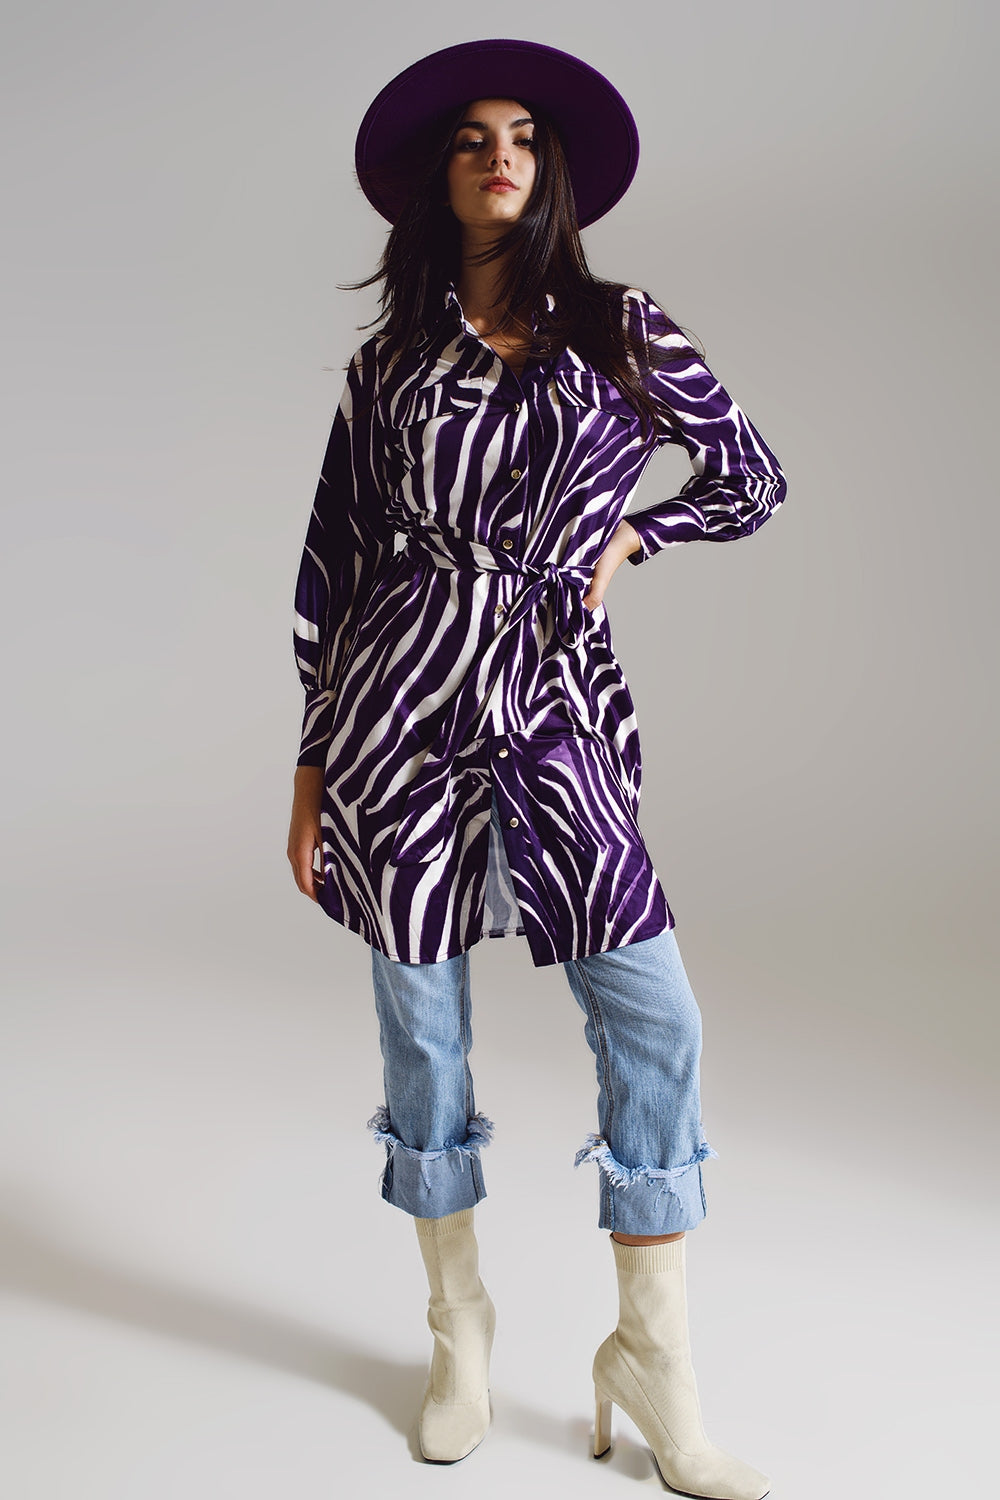 Q2 Midi short dress with zebra print in white and purple